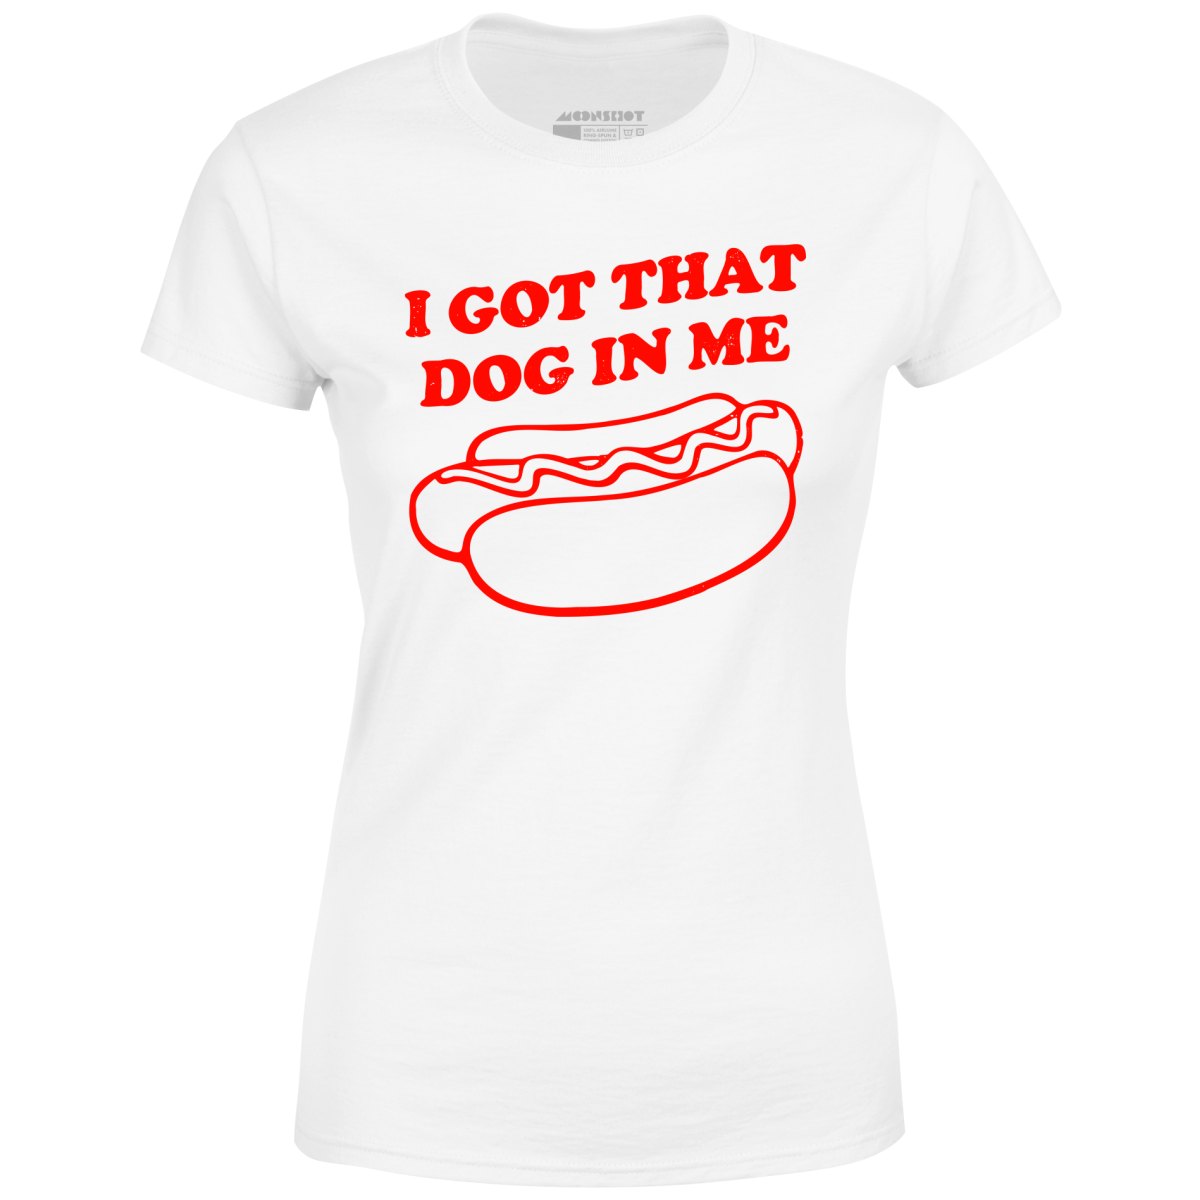 I Got That Dog in Me - Women's T-Shirt